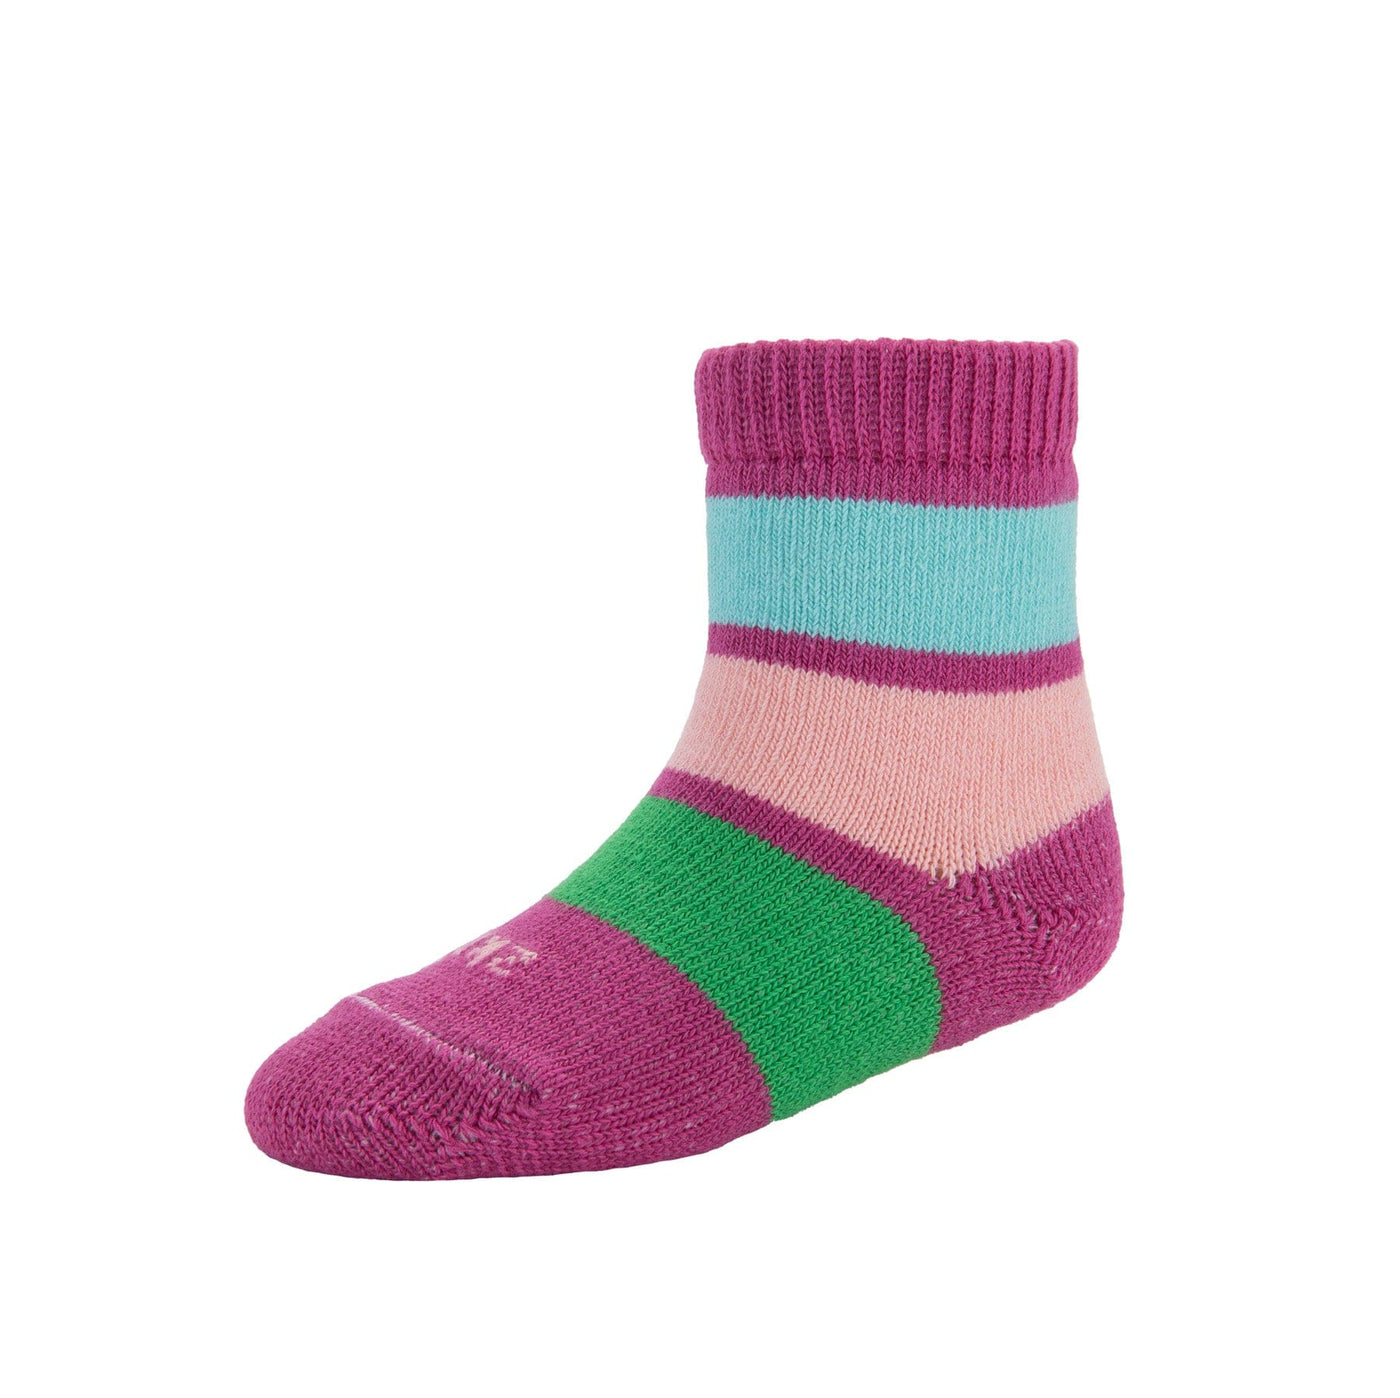 Zkano Kids Kids - rugby stripe organic cotton crew socks - berry organic-socks-made-in-usa